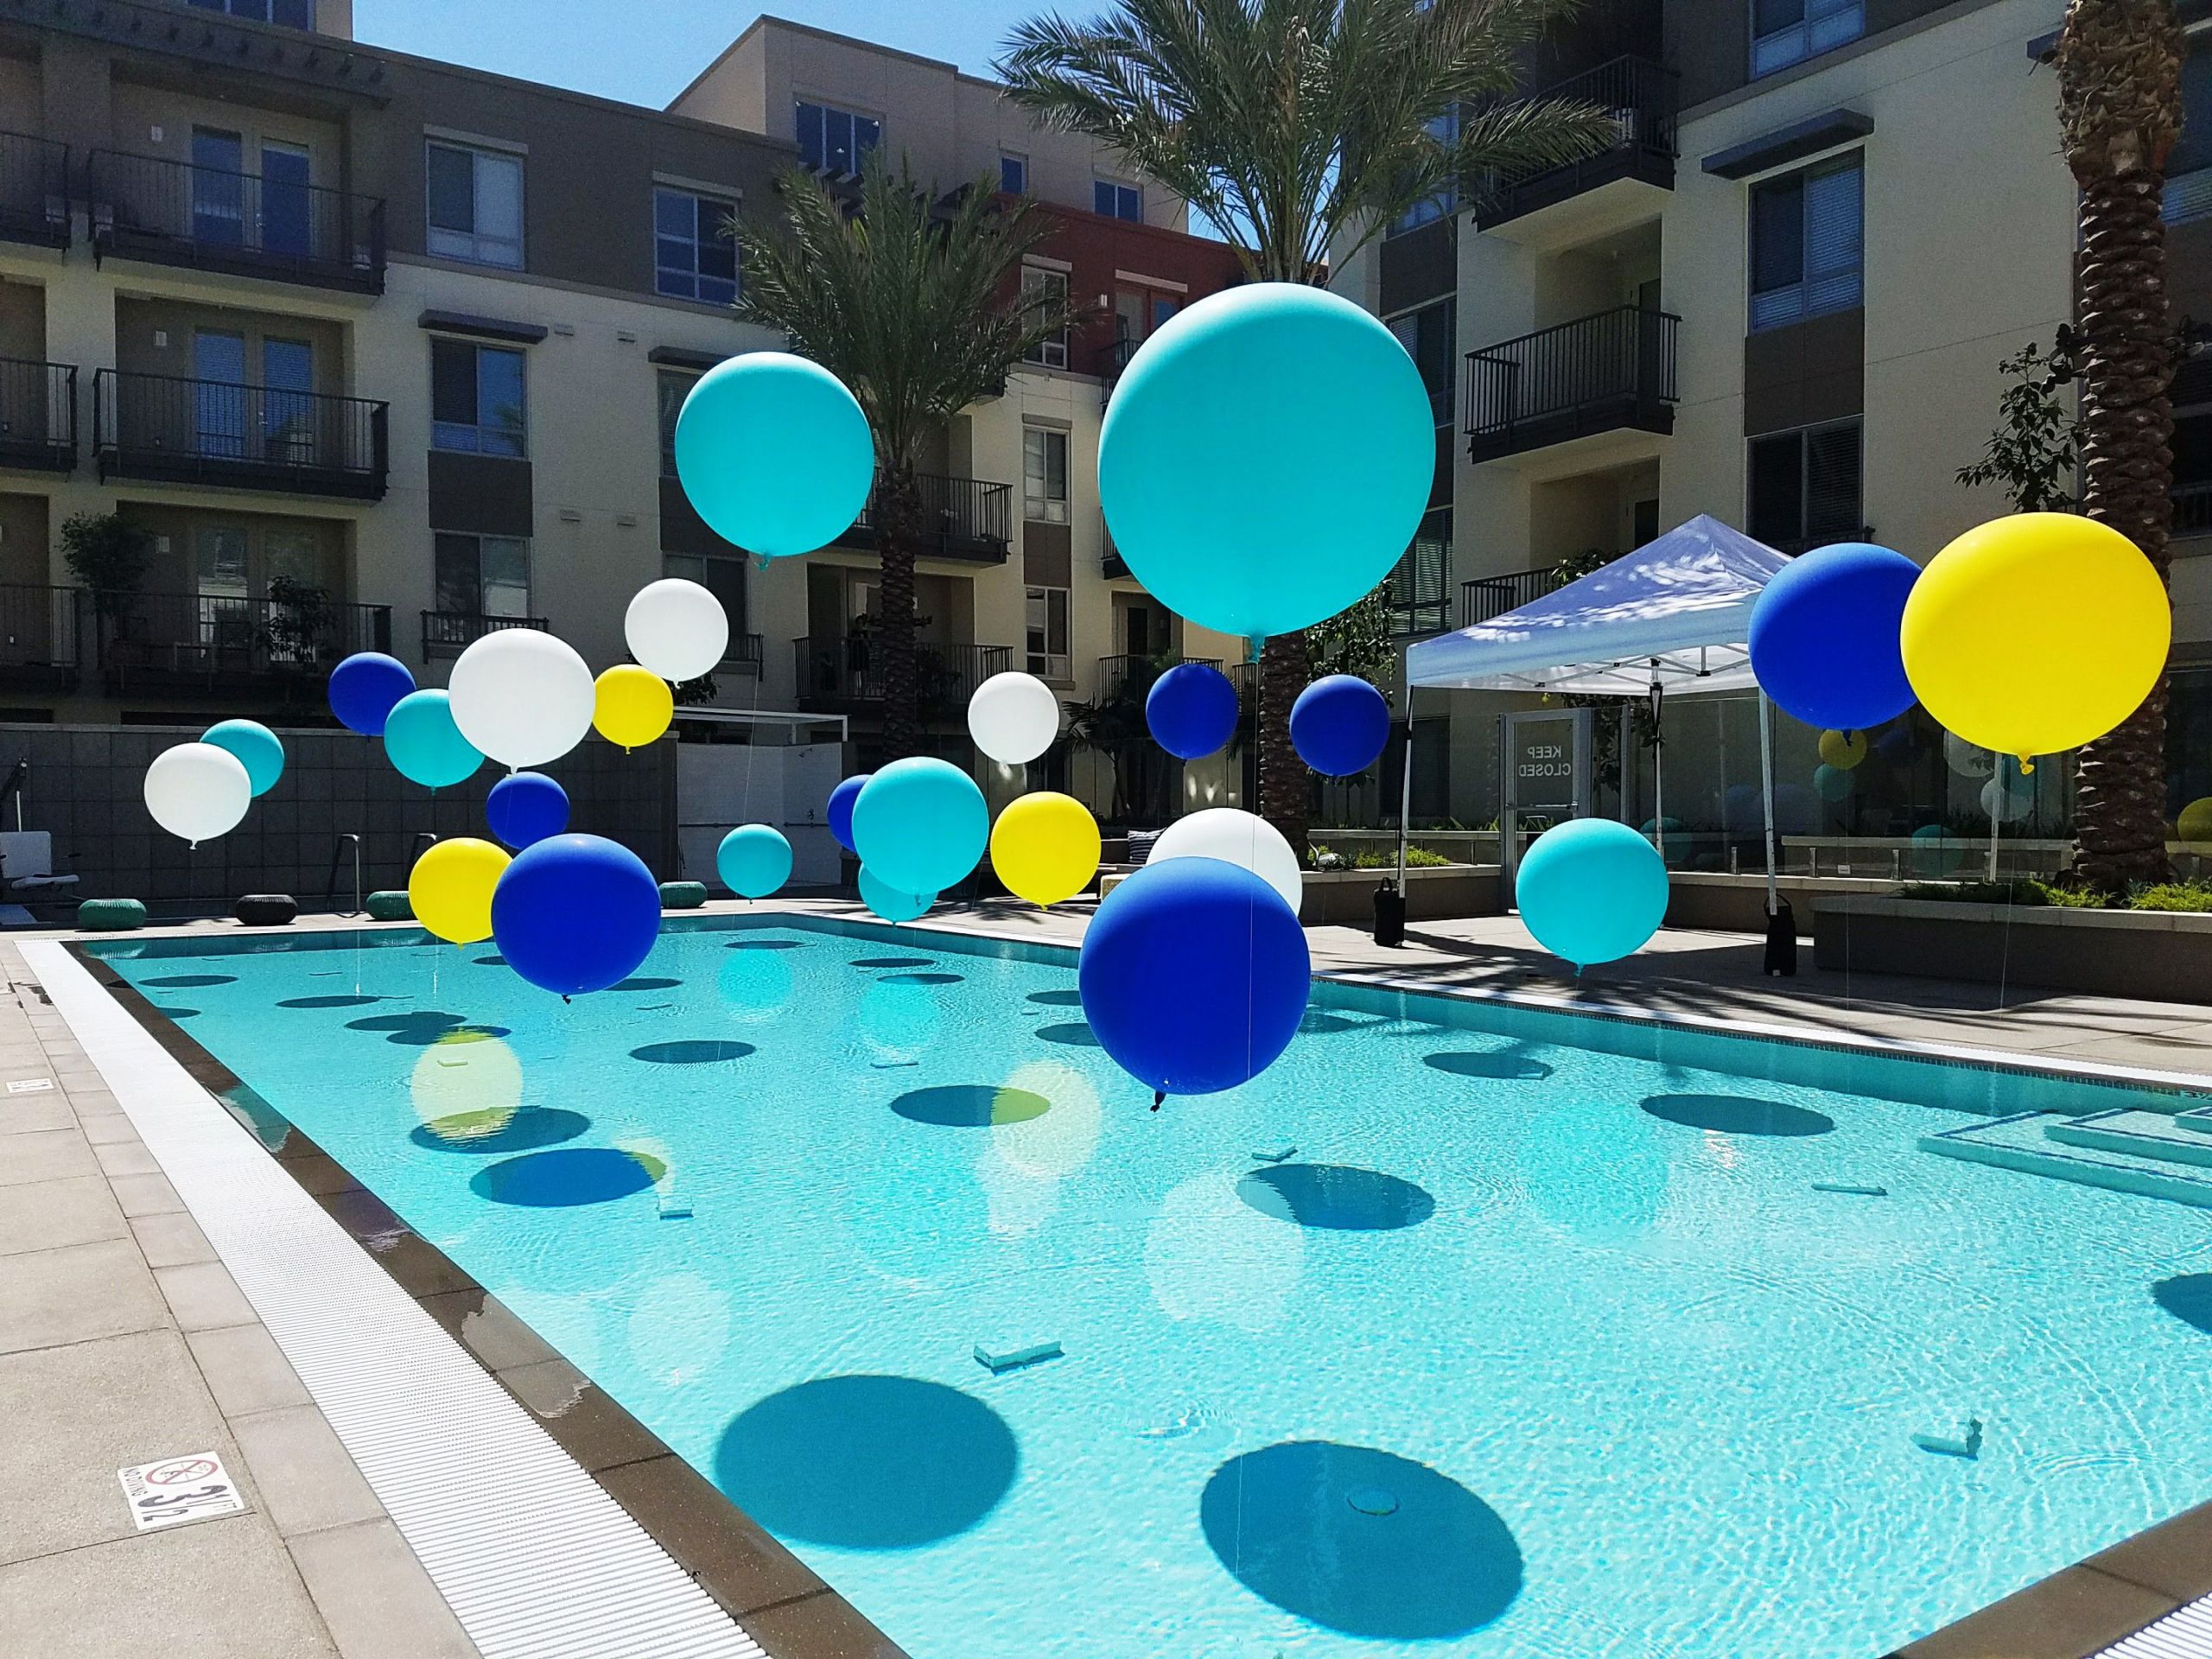 Swim Pool Party Ideas
 Pool balloons summer party pool party party ideas